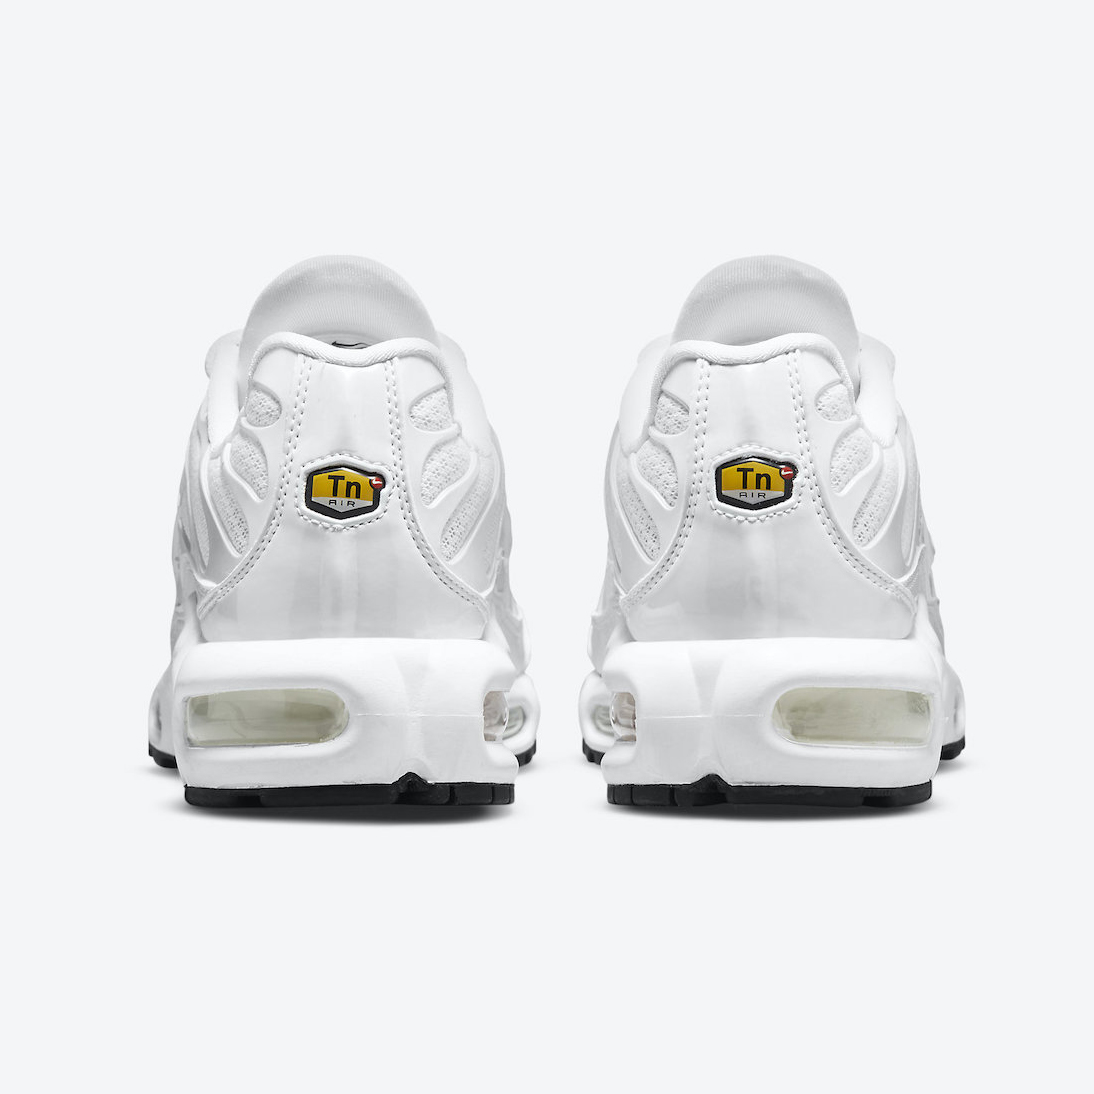 Nike Air Max Plus Premium “Triple White” Release Date | Nice Kicks